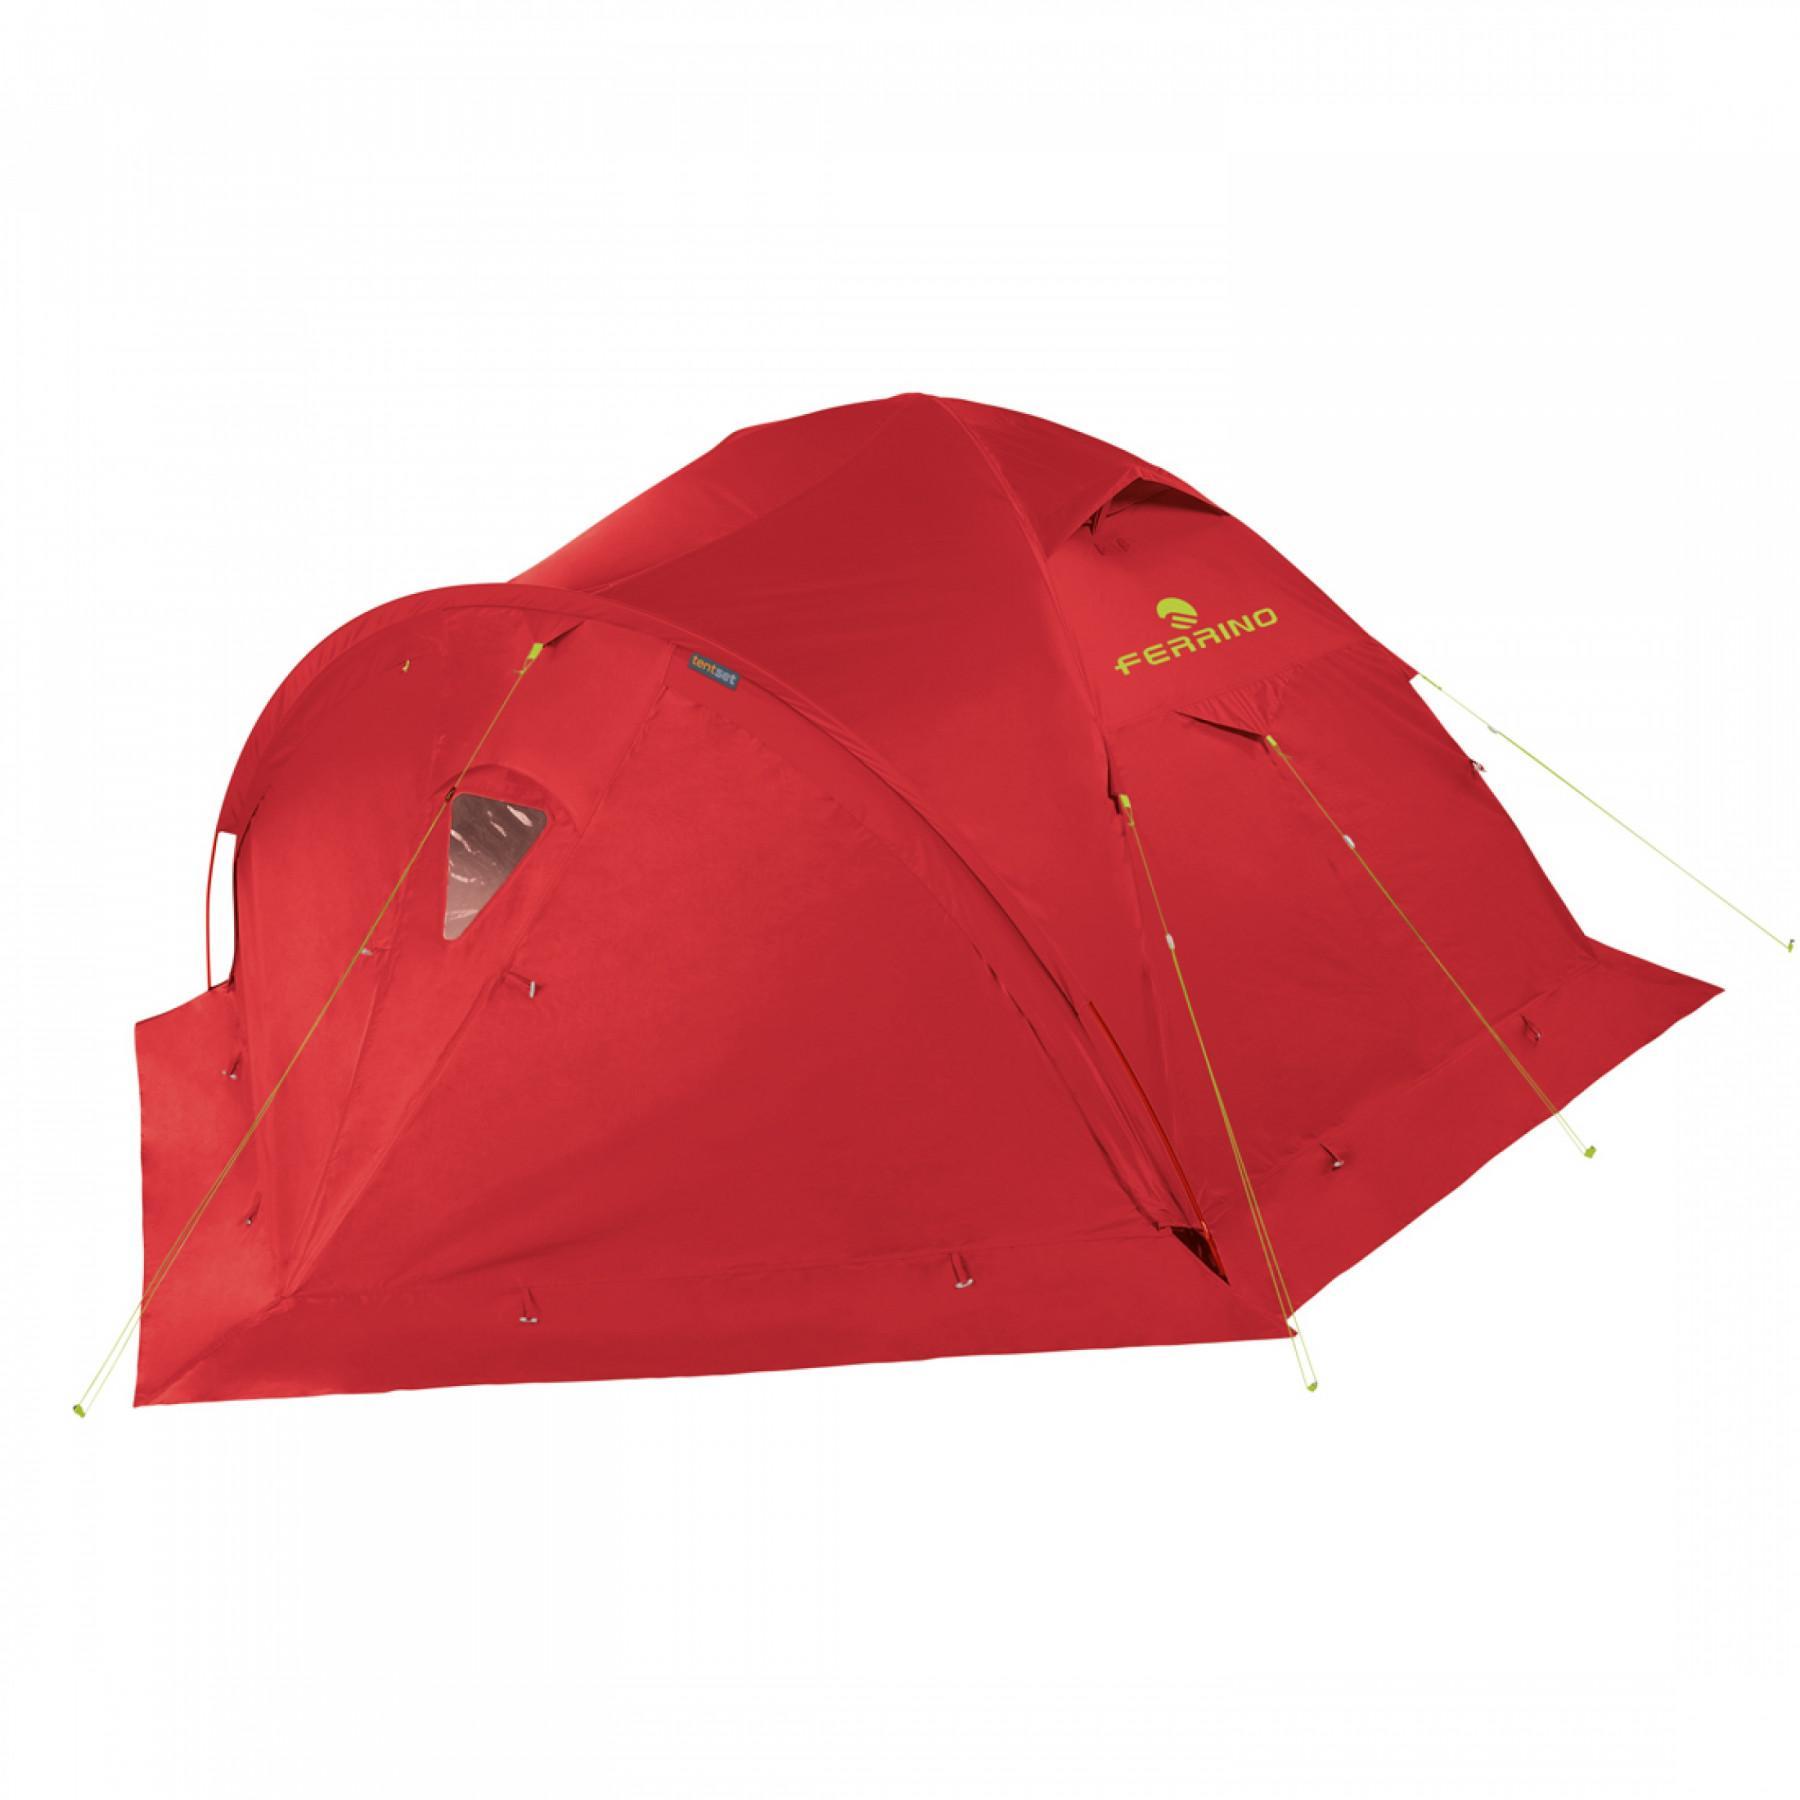 Tent Ferrino X3 fly pro apsis